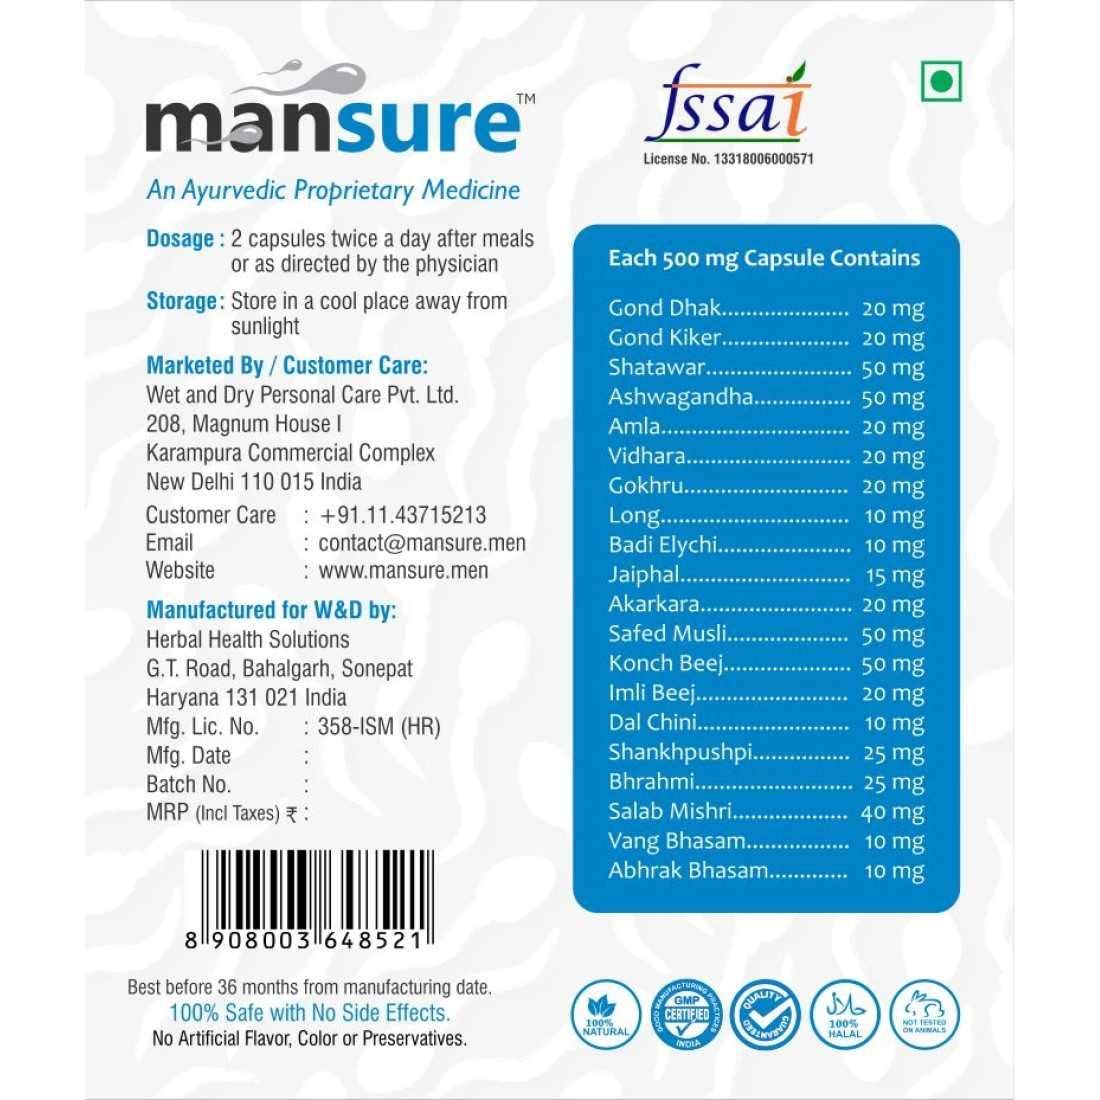 Mansure Men's Reproductive Health Ayurvedic Supplement Image